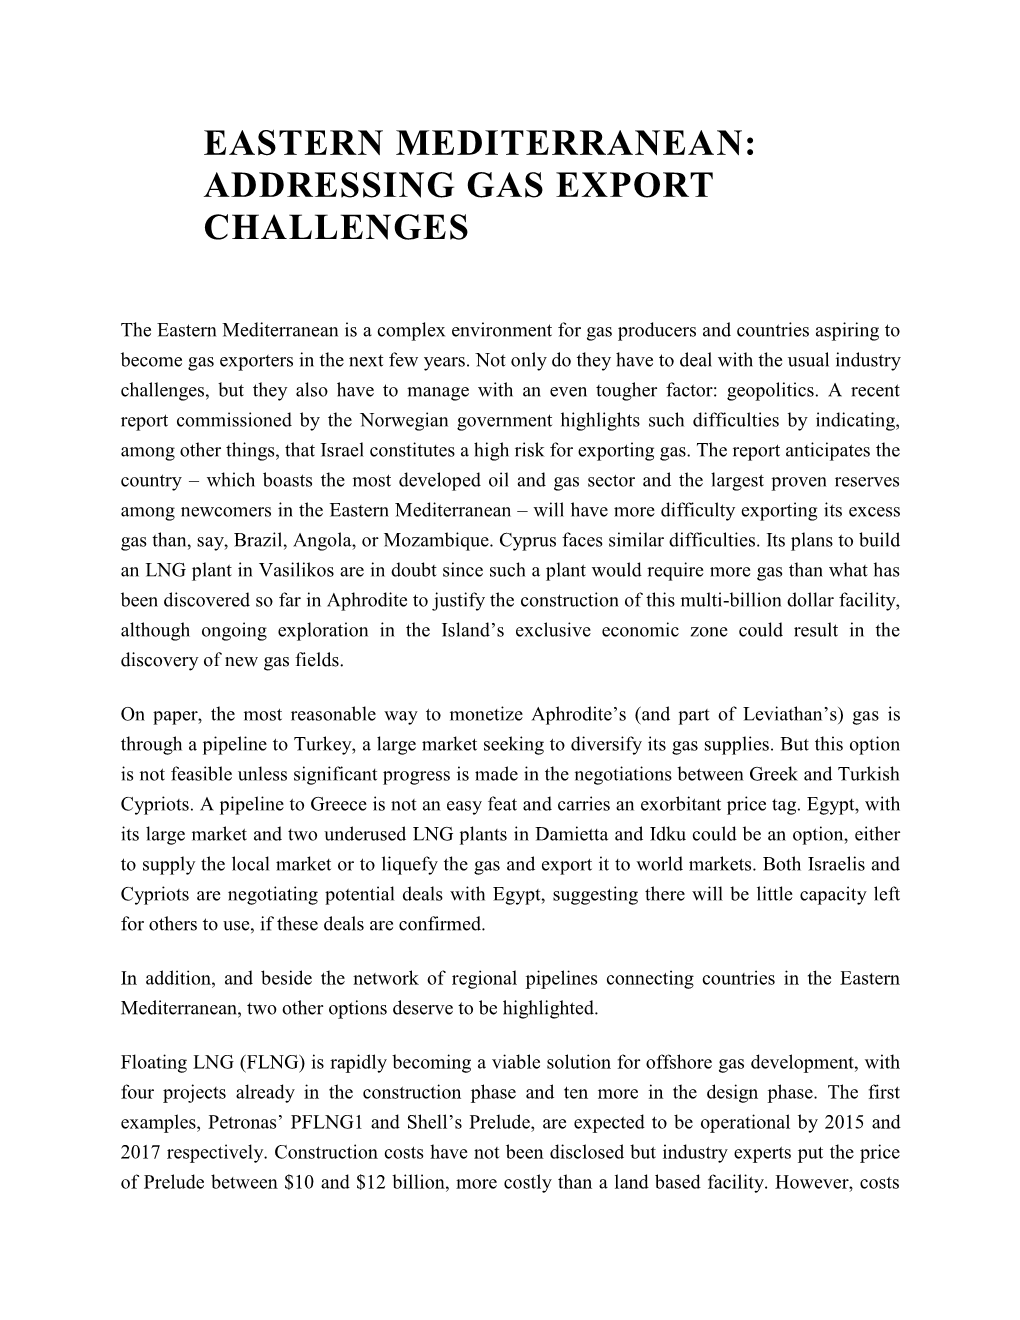 Eastern Mediterranean: Addressing Gas Export Challenges